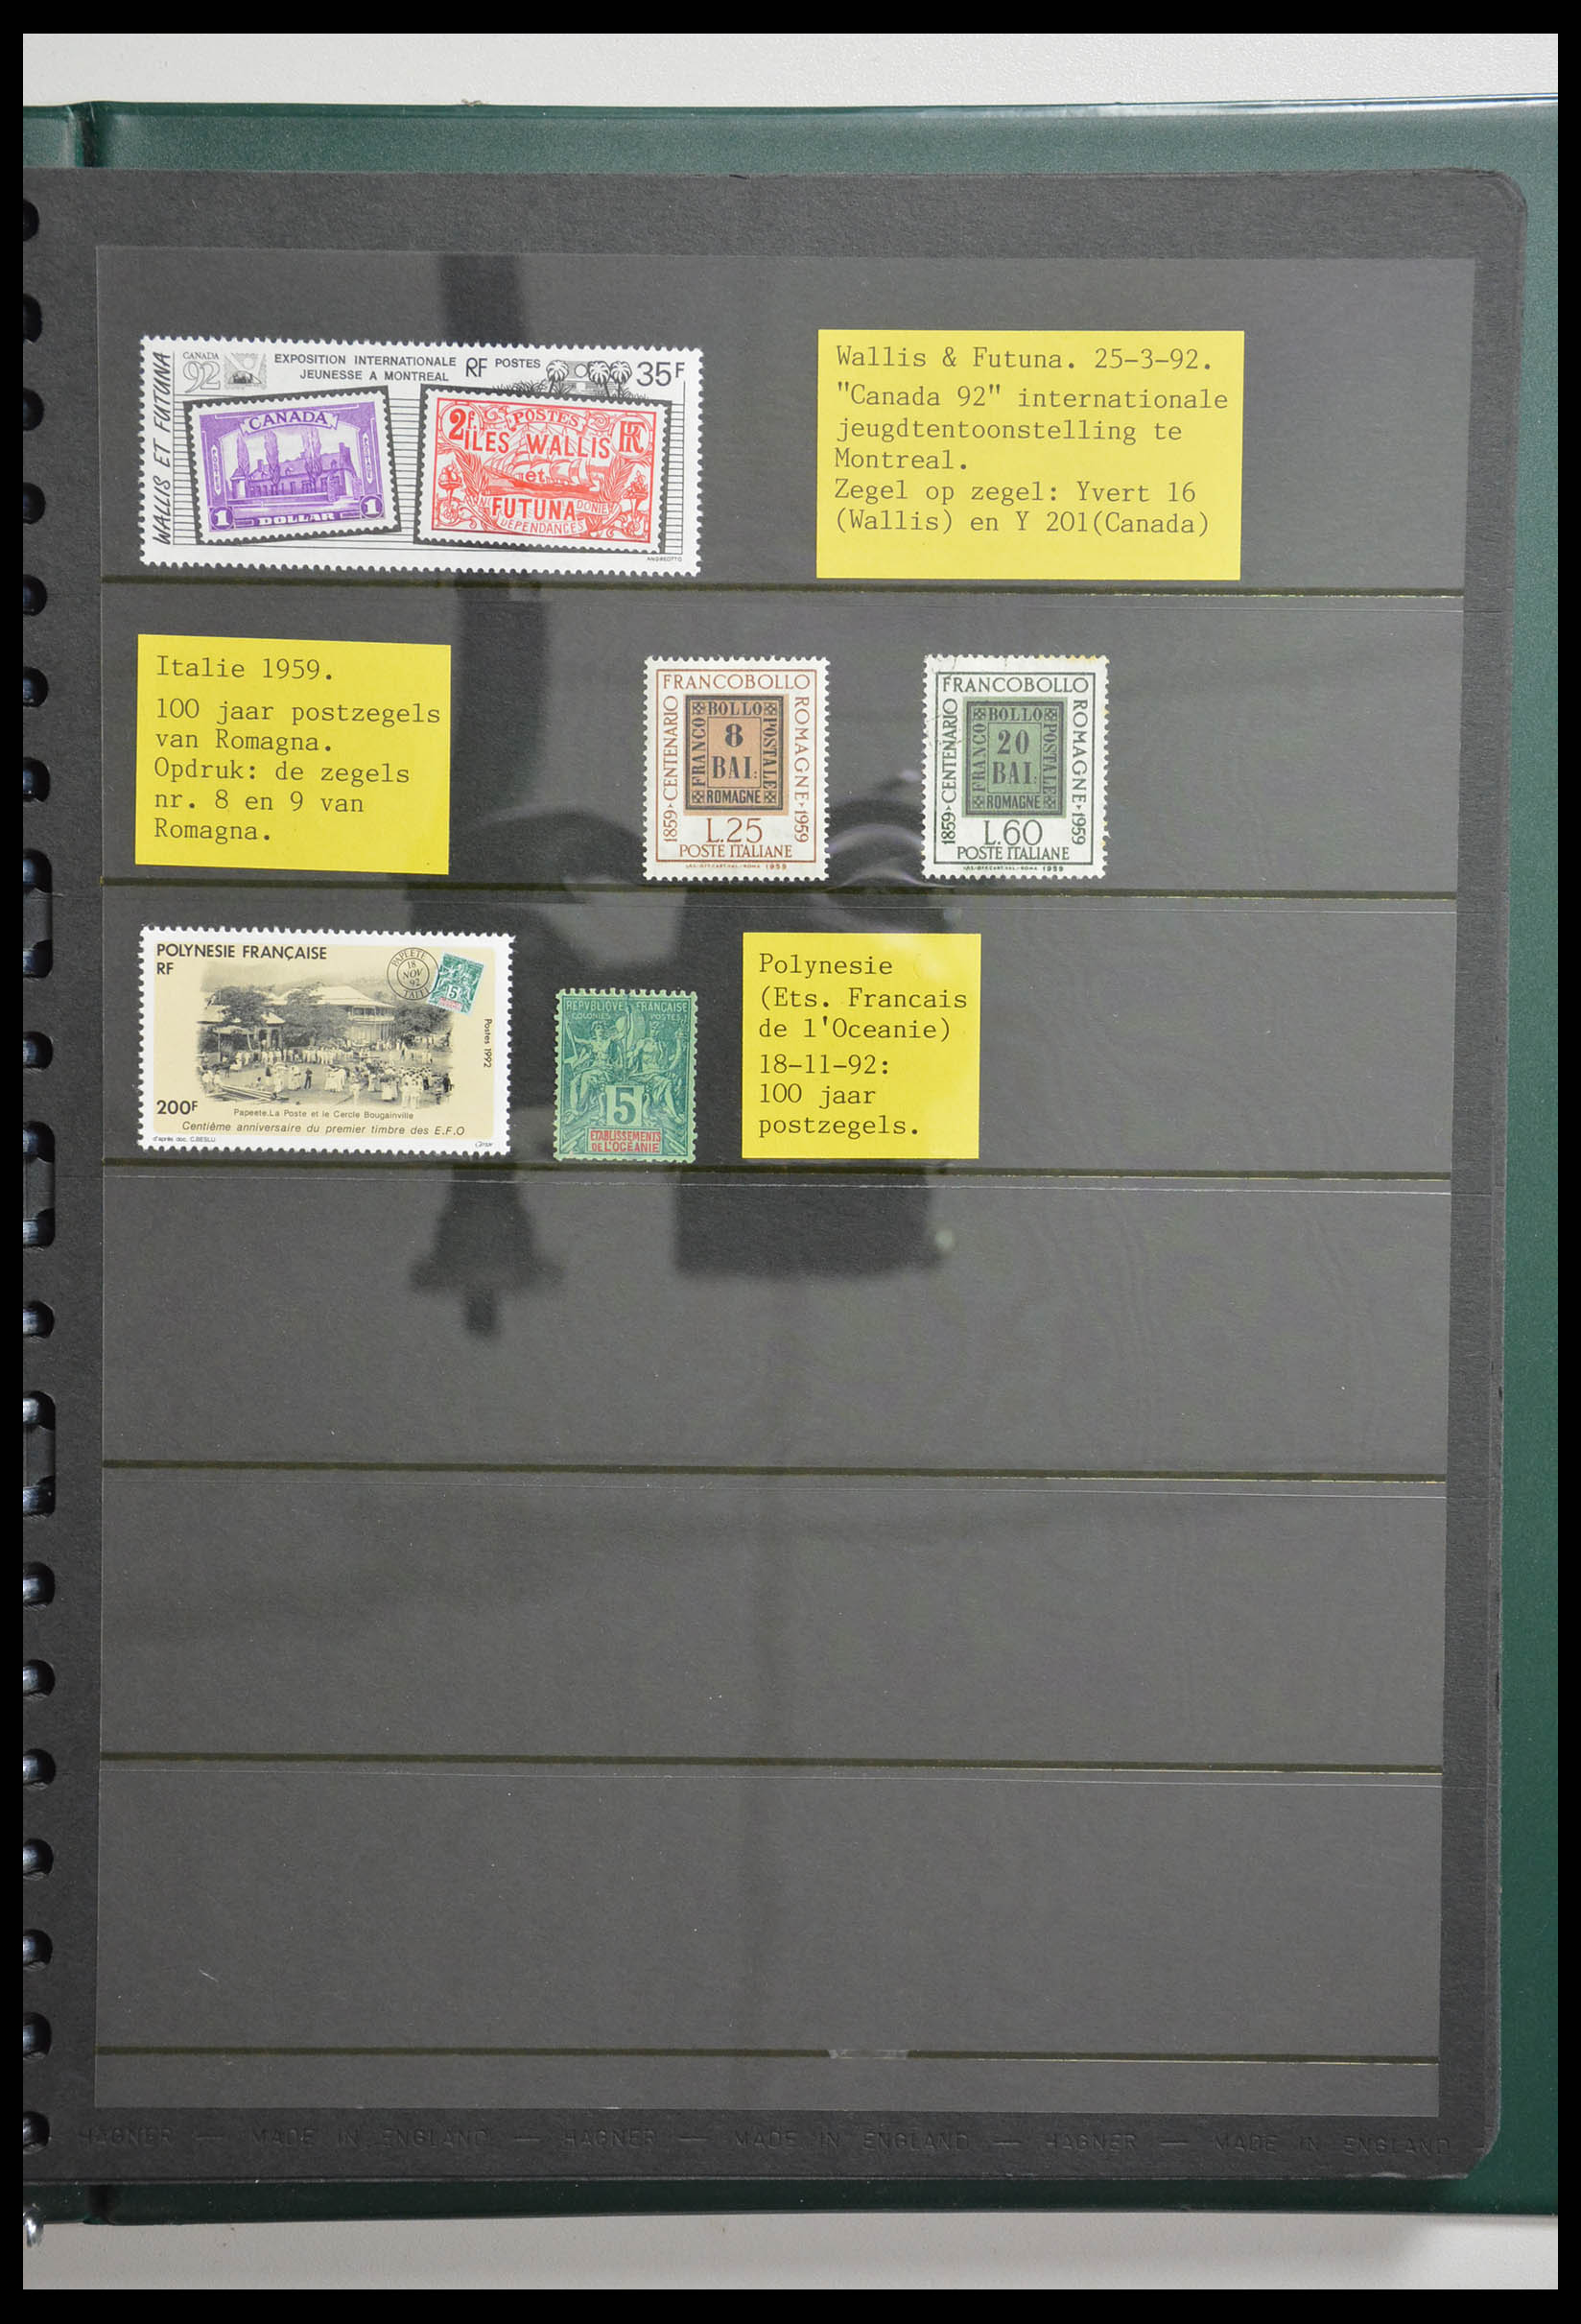 28337 103 - 28337 Postzegel op postzegel 1840-2001.